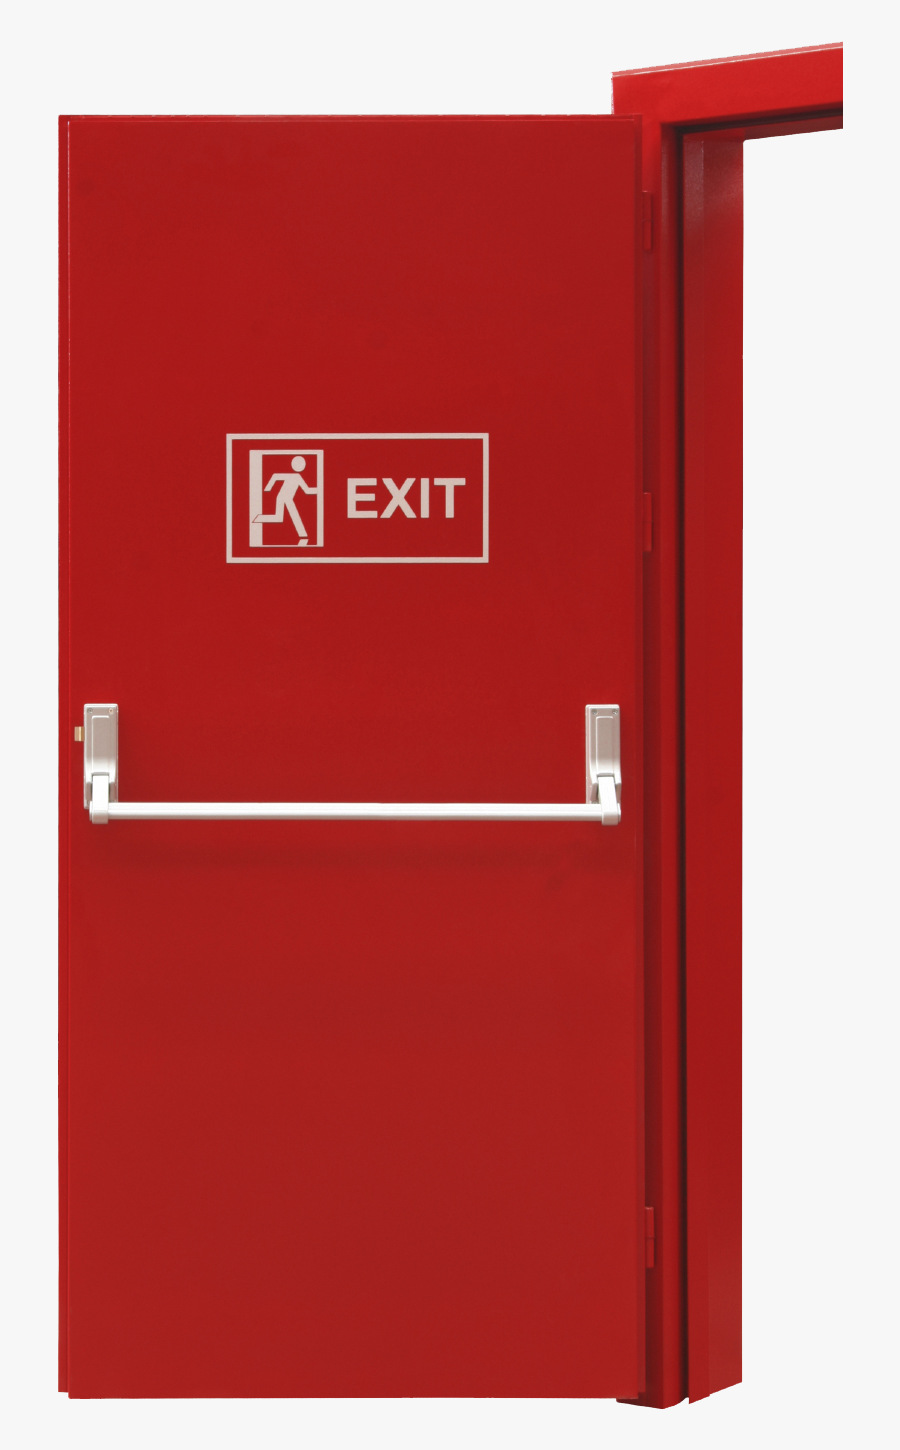 Fire Exit Door - Fire Exit Door Clipart, Transparent Clipart